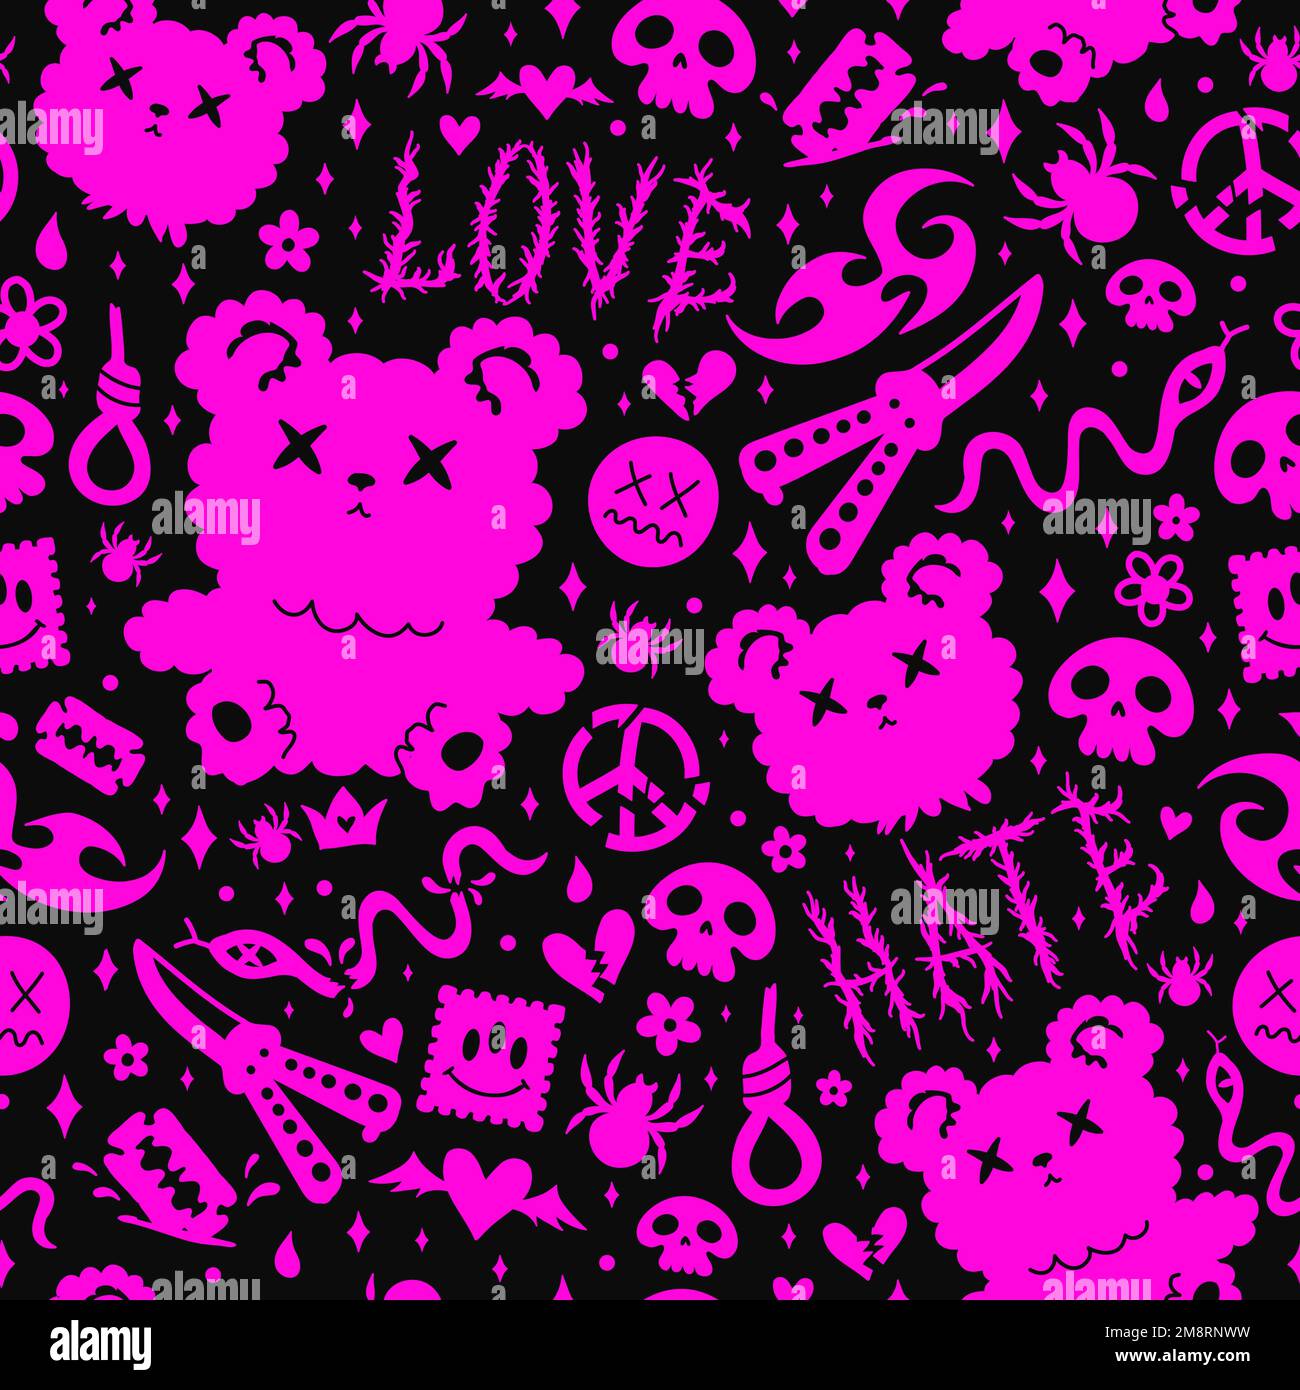 Grunge emo seamless pattern wallpaper art.Vector graphic background illustration.Dead bear toy,goth,emo seamless pattern wallpaper print concept Stock Vector